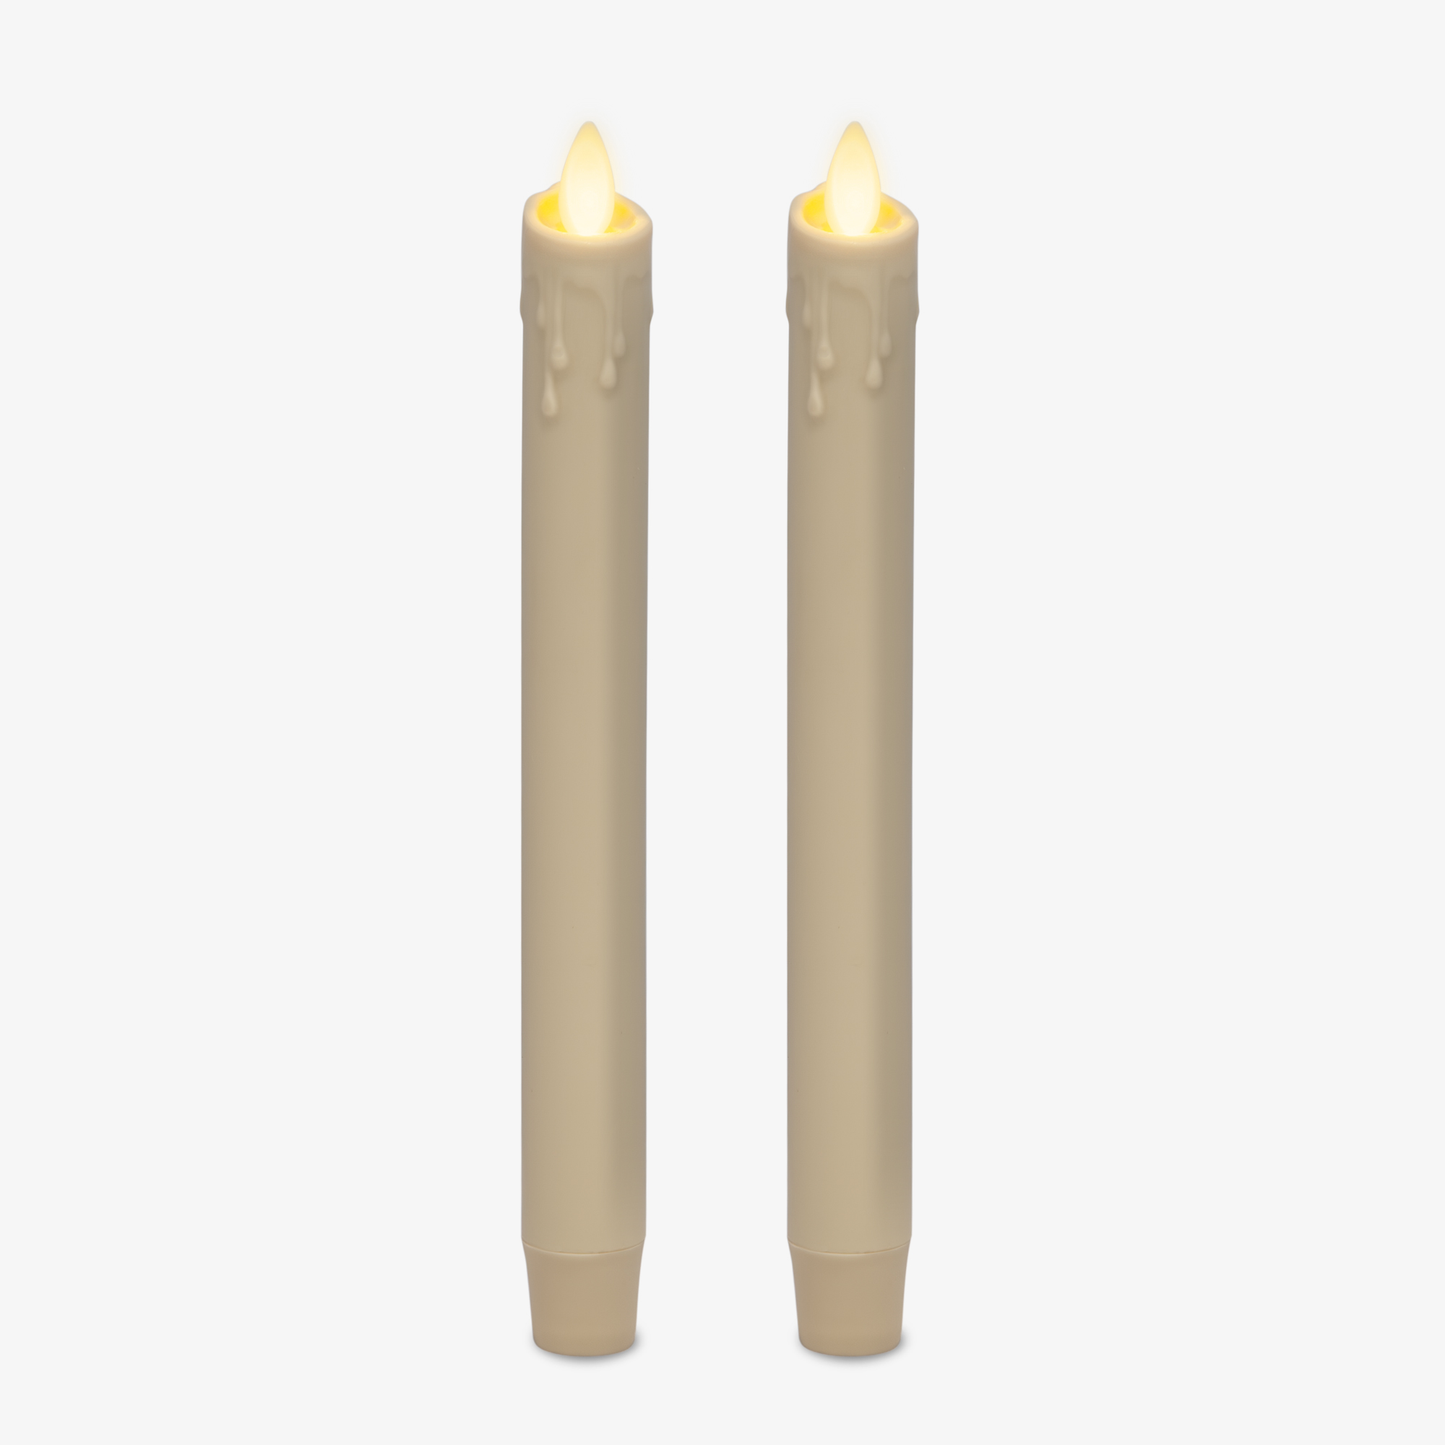 Black Wax Drip Flameless Candle Pillar - Scallop Top